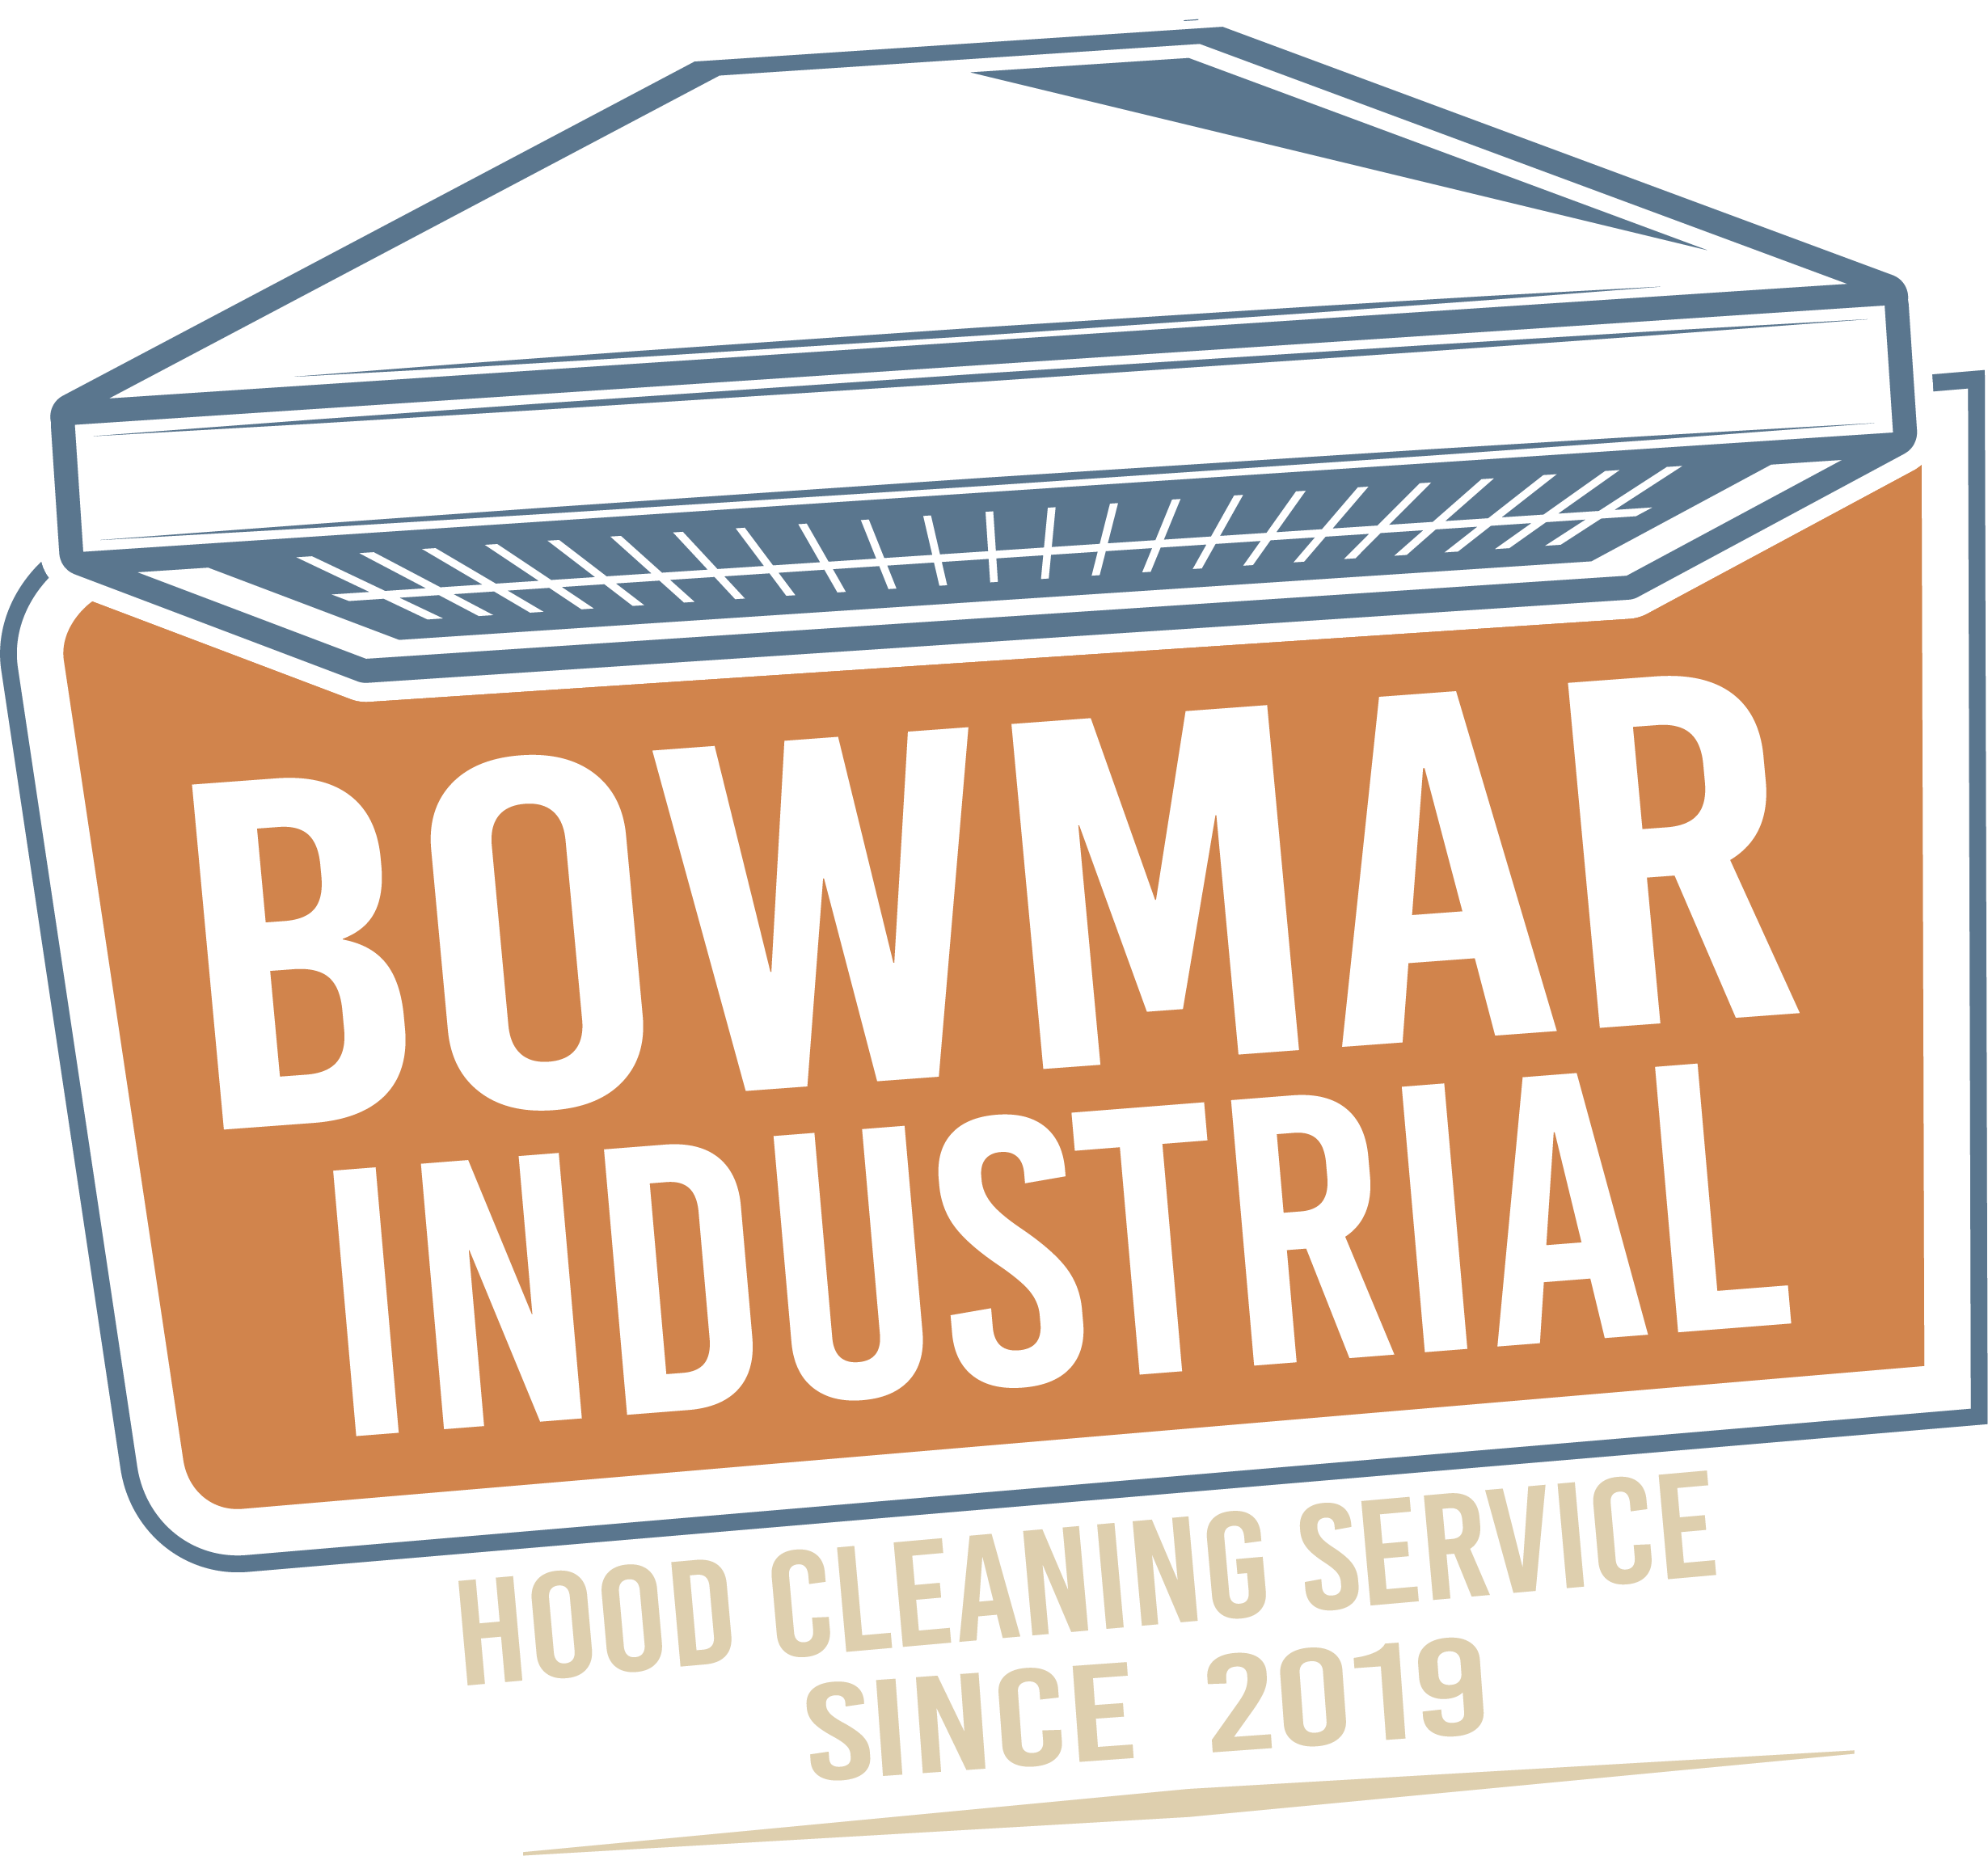 Bowmar Industrial